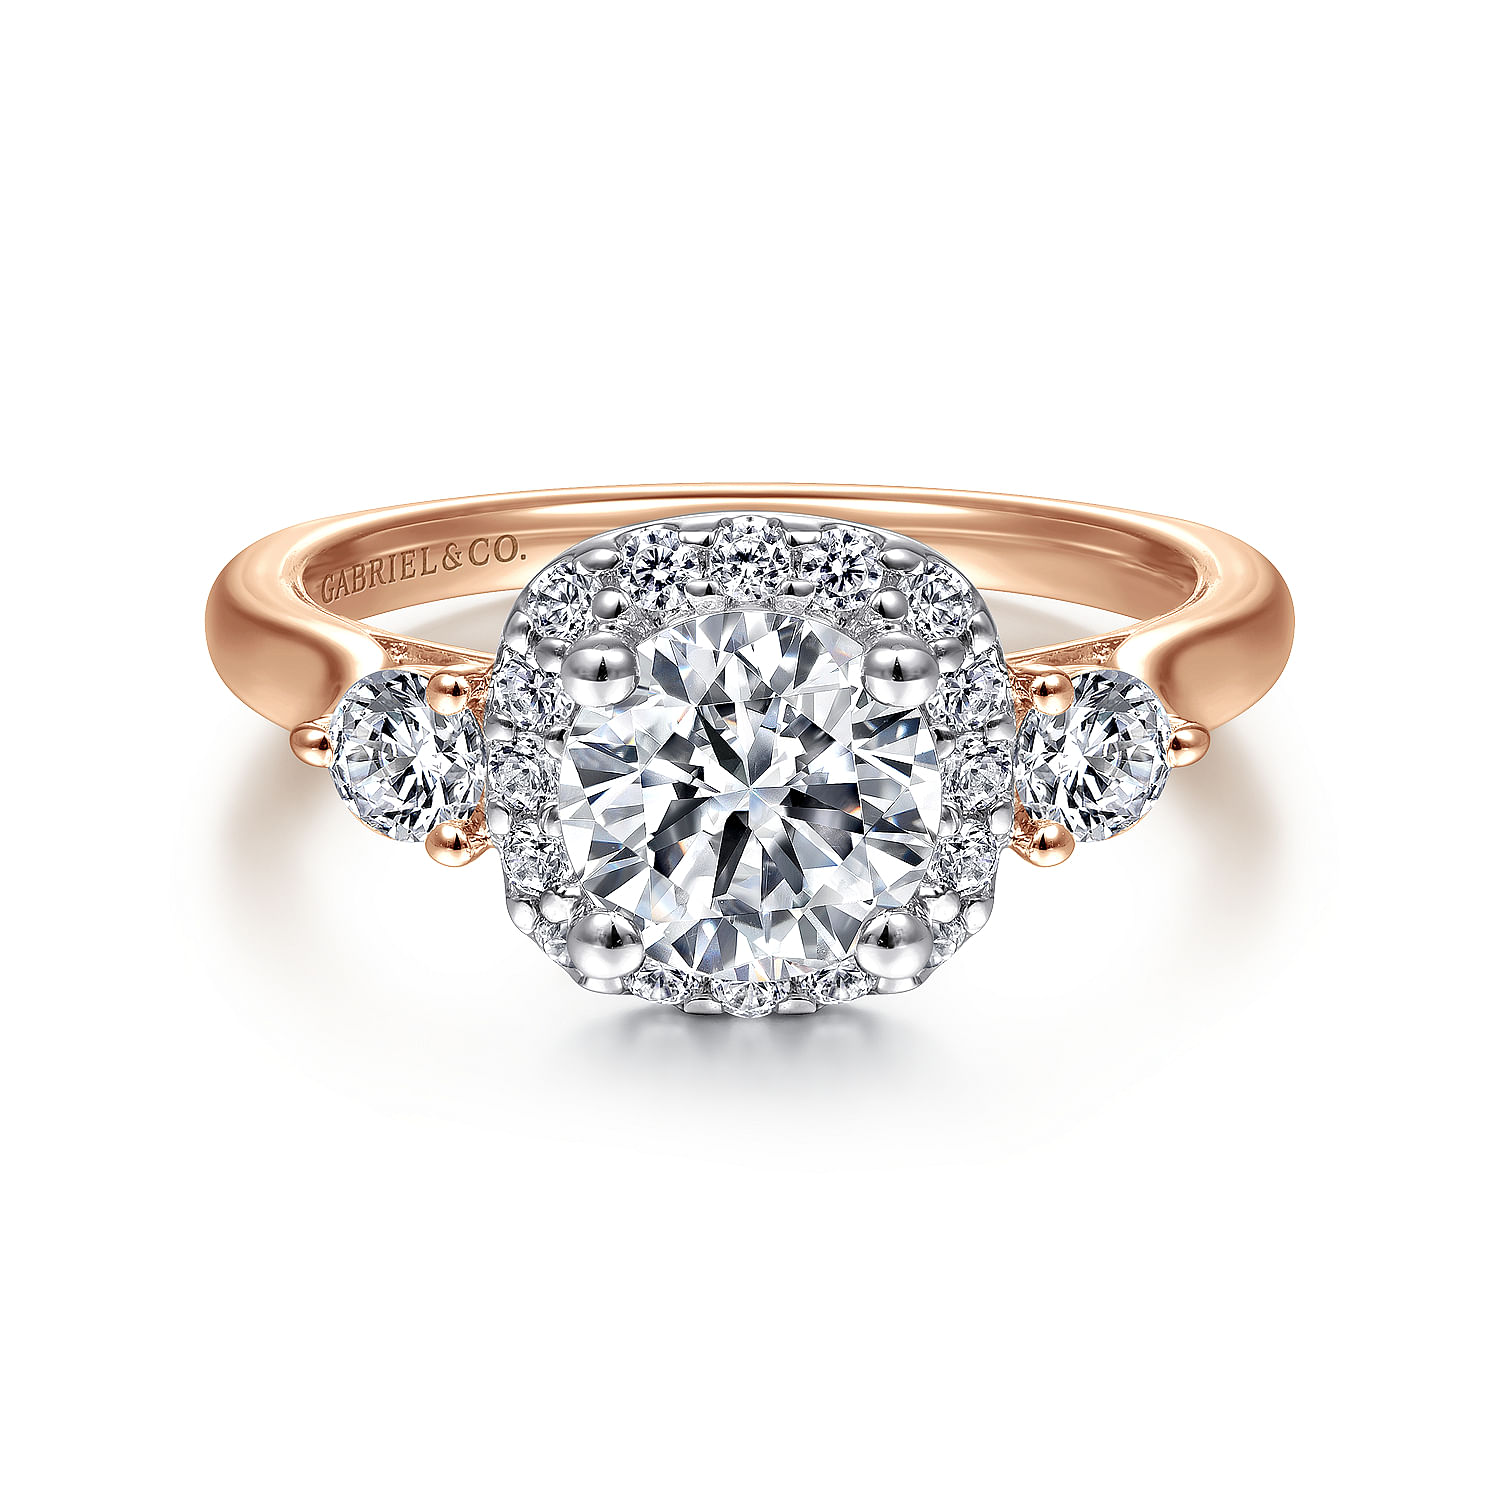 Martine---14K-Rose-Gold-Cushion-Halo-Round-Diamond-Engagement-Ring1